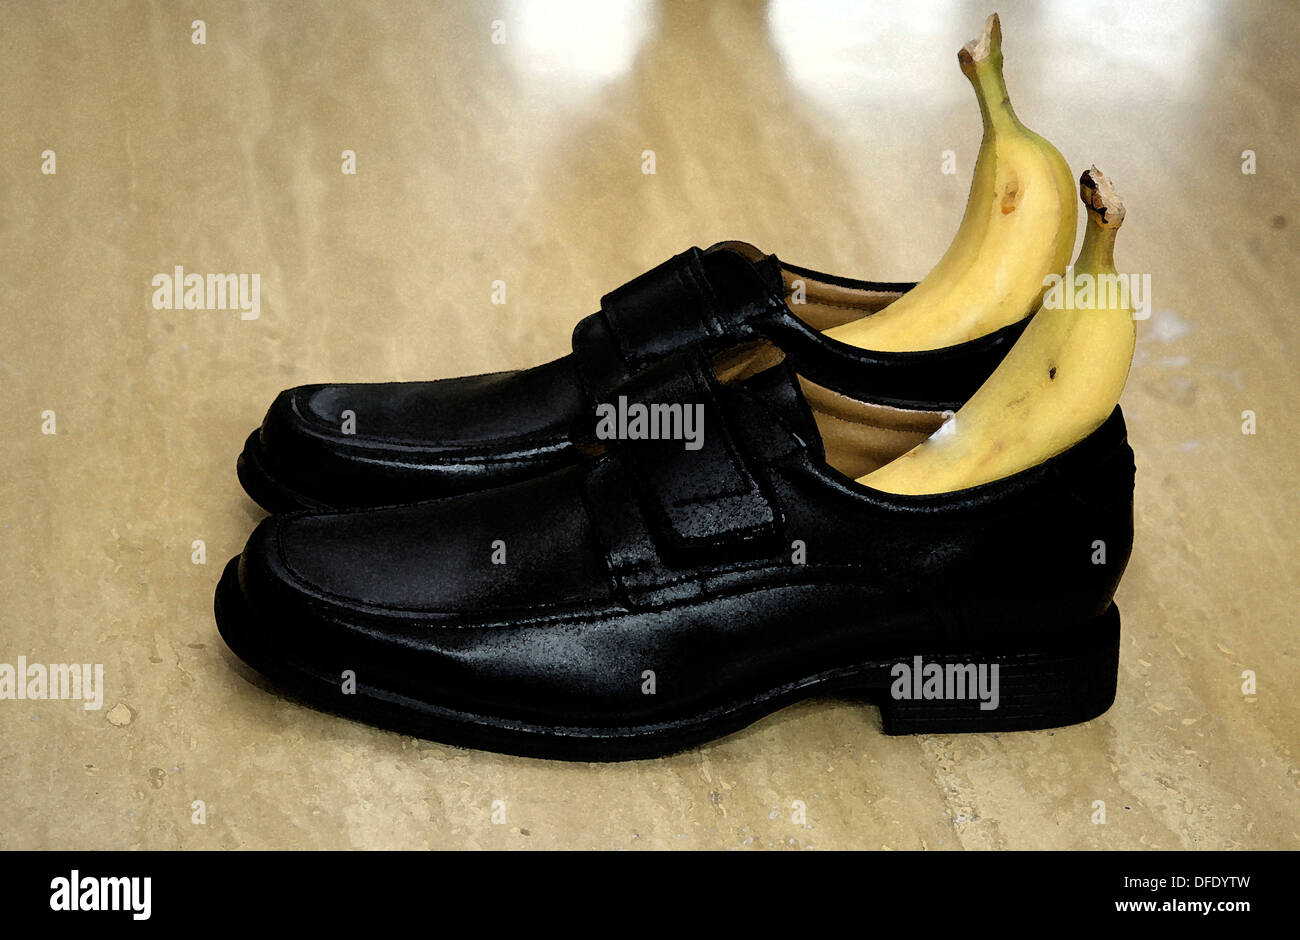 Bananas in dress shoes on hardwood floor Stock Photo